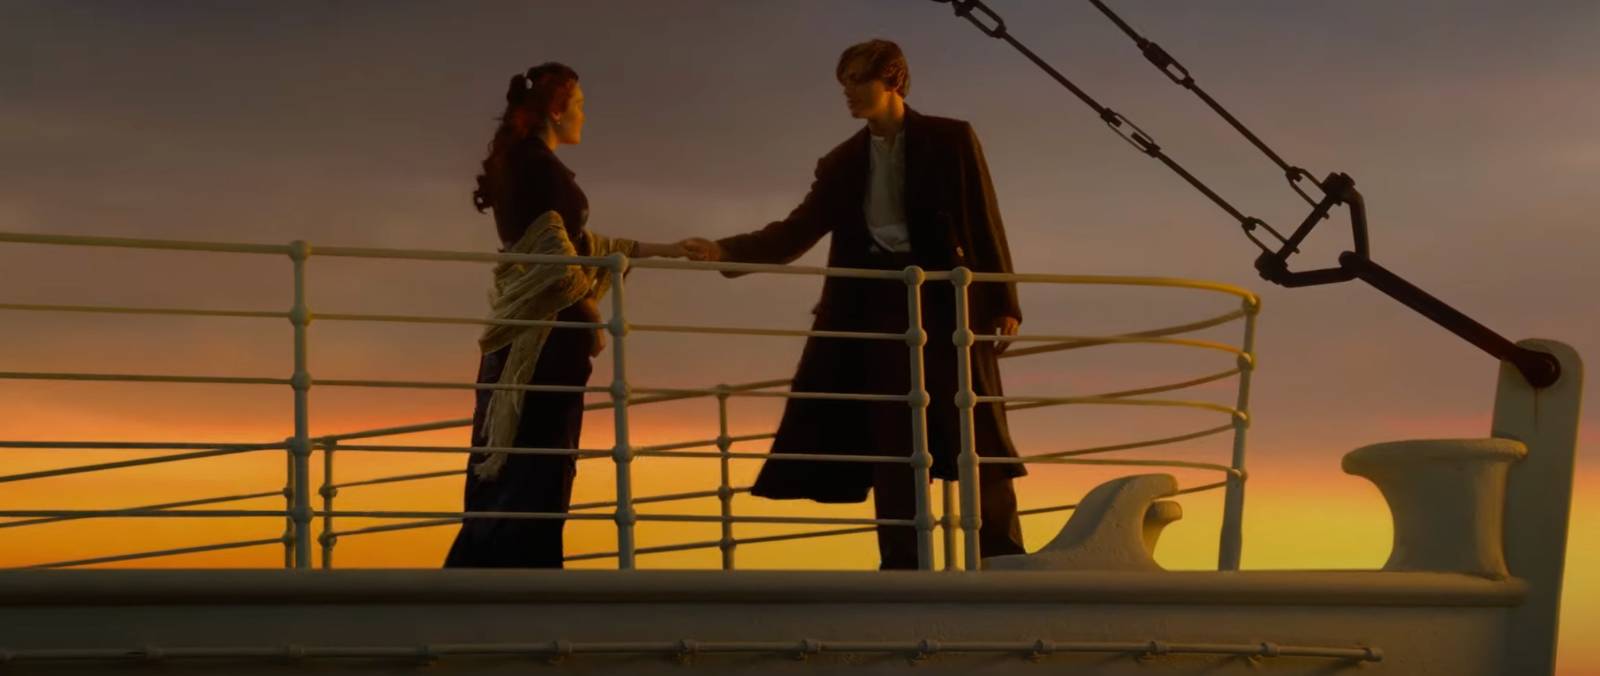 Titanic 25th Anniversary Trailer: James Cameron's Blockbuster Returns in 3D  4K High-Frame Rate Remaster